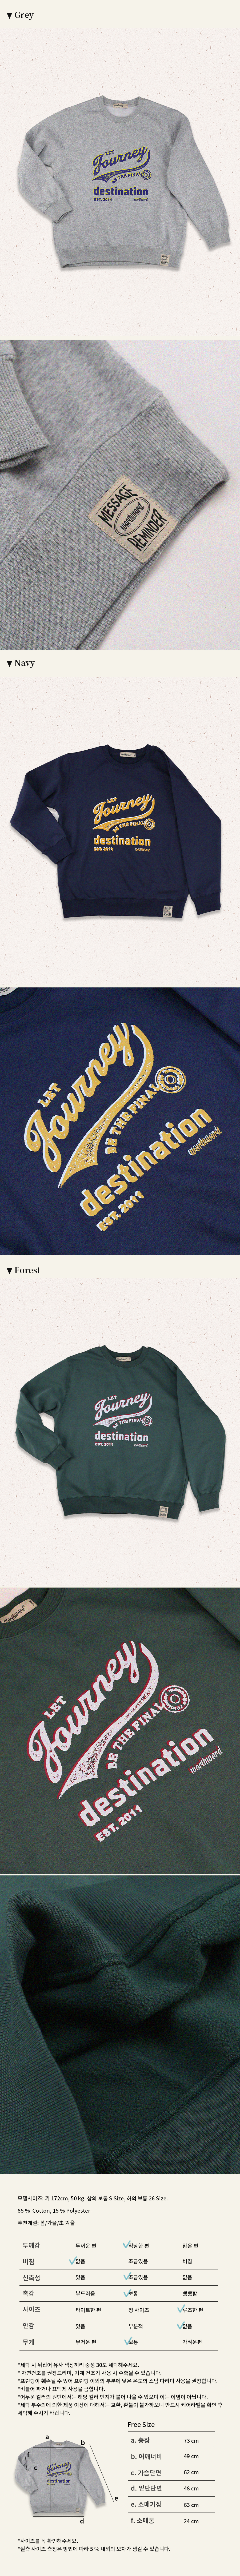 DE-900-Journey-Shirts-2.jpg